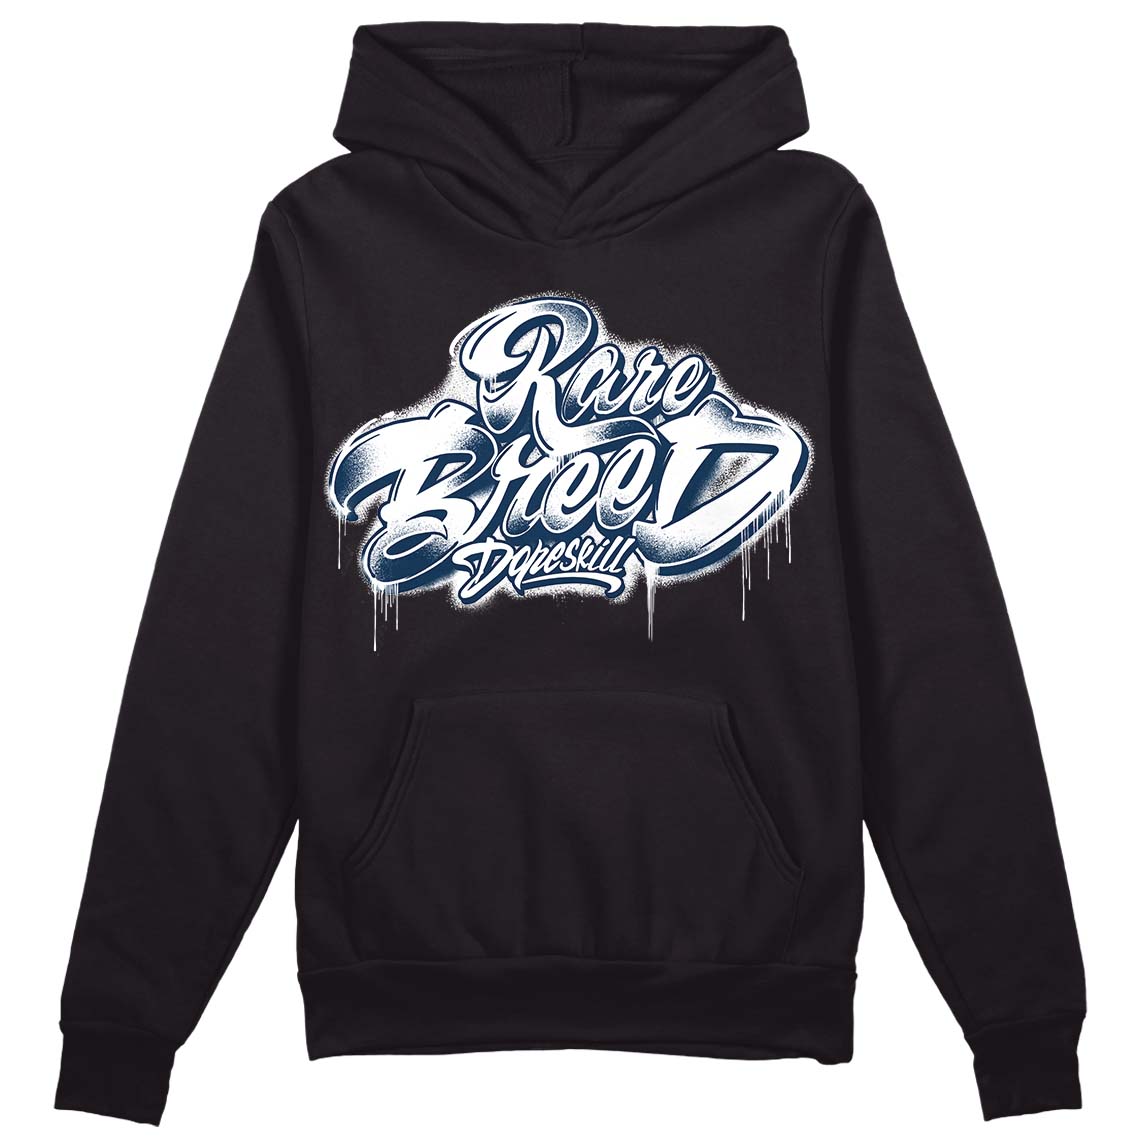 Brave Blue 13s DopeSkill Hoodie Sweatshirt Rare Breed Type Graphic - Black 